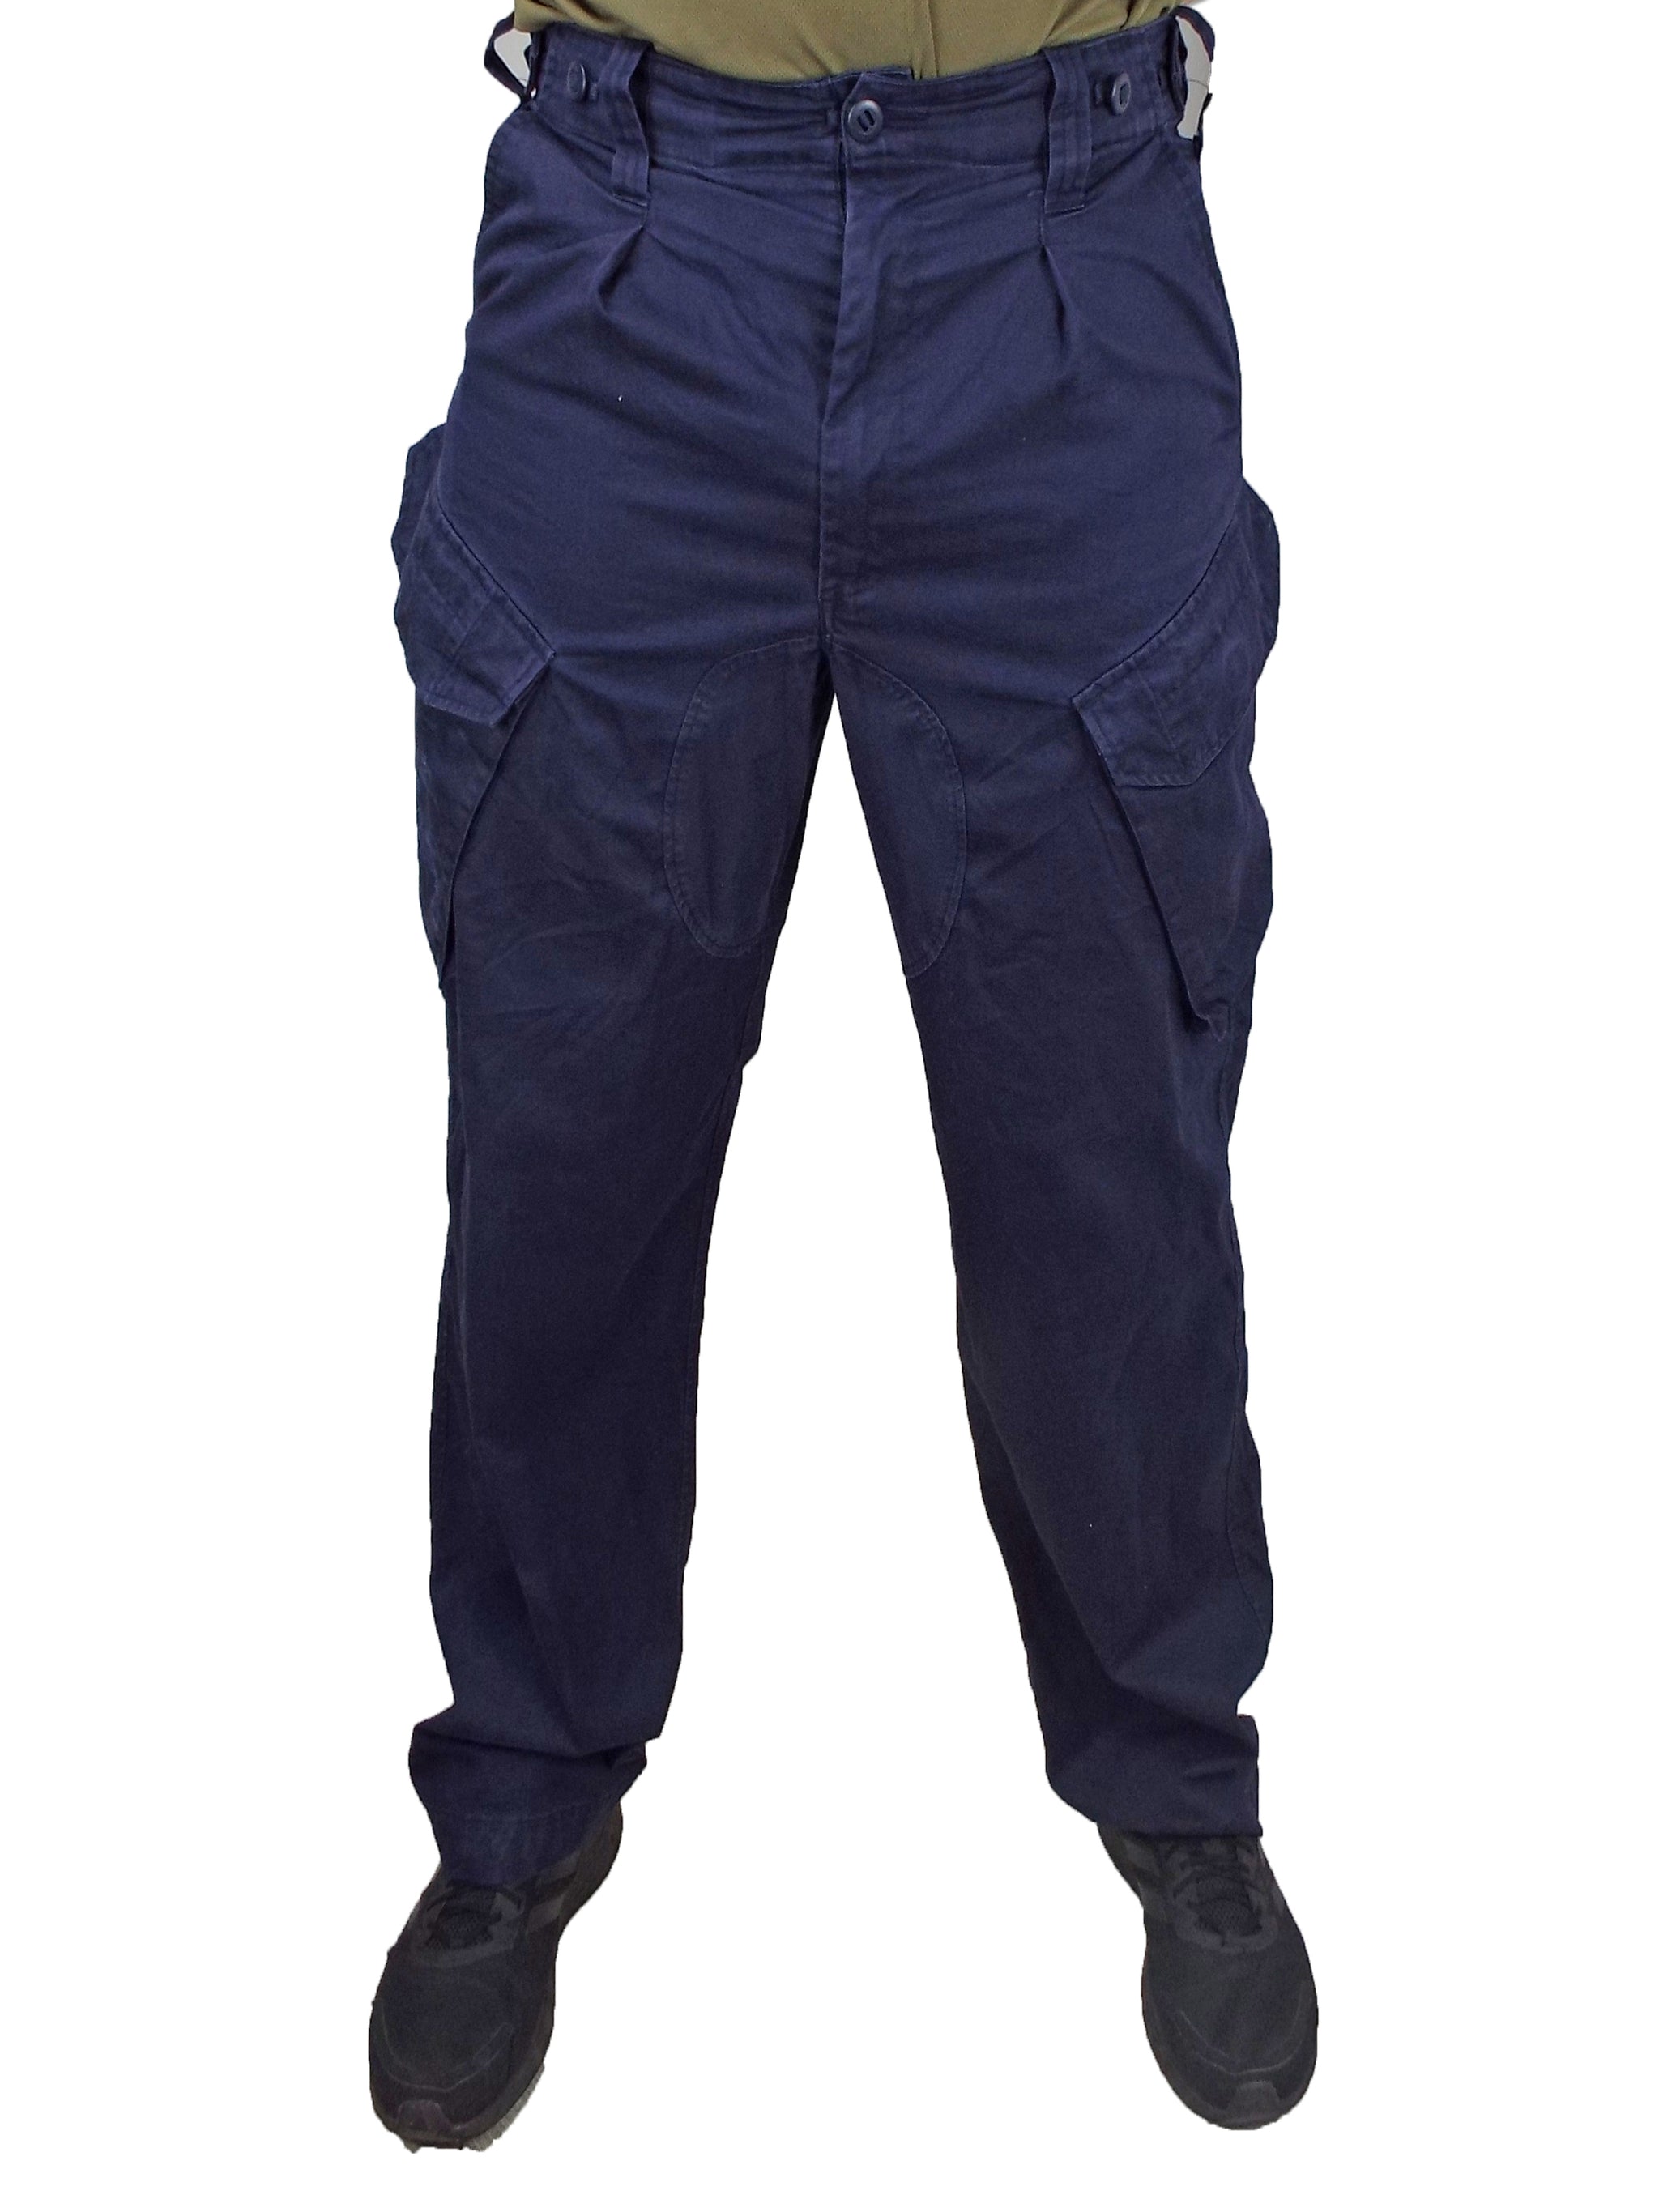 British Royal Navy Dark Blue Combat Trousers - Five pocket 